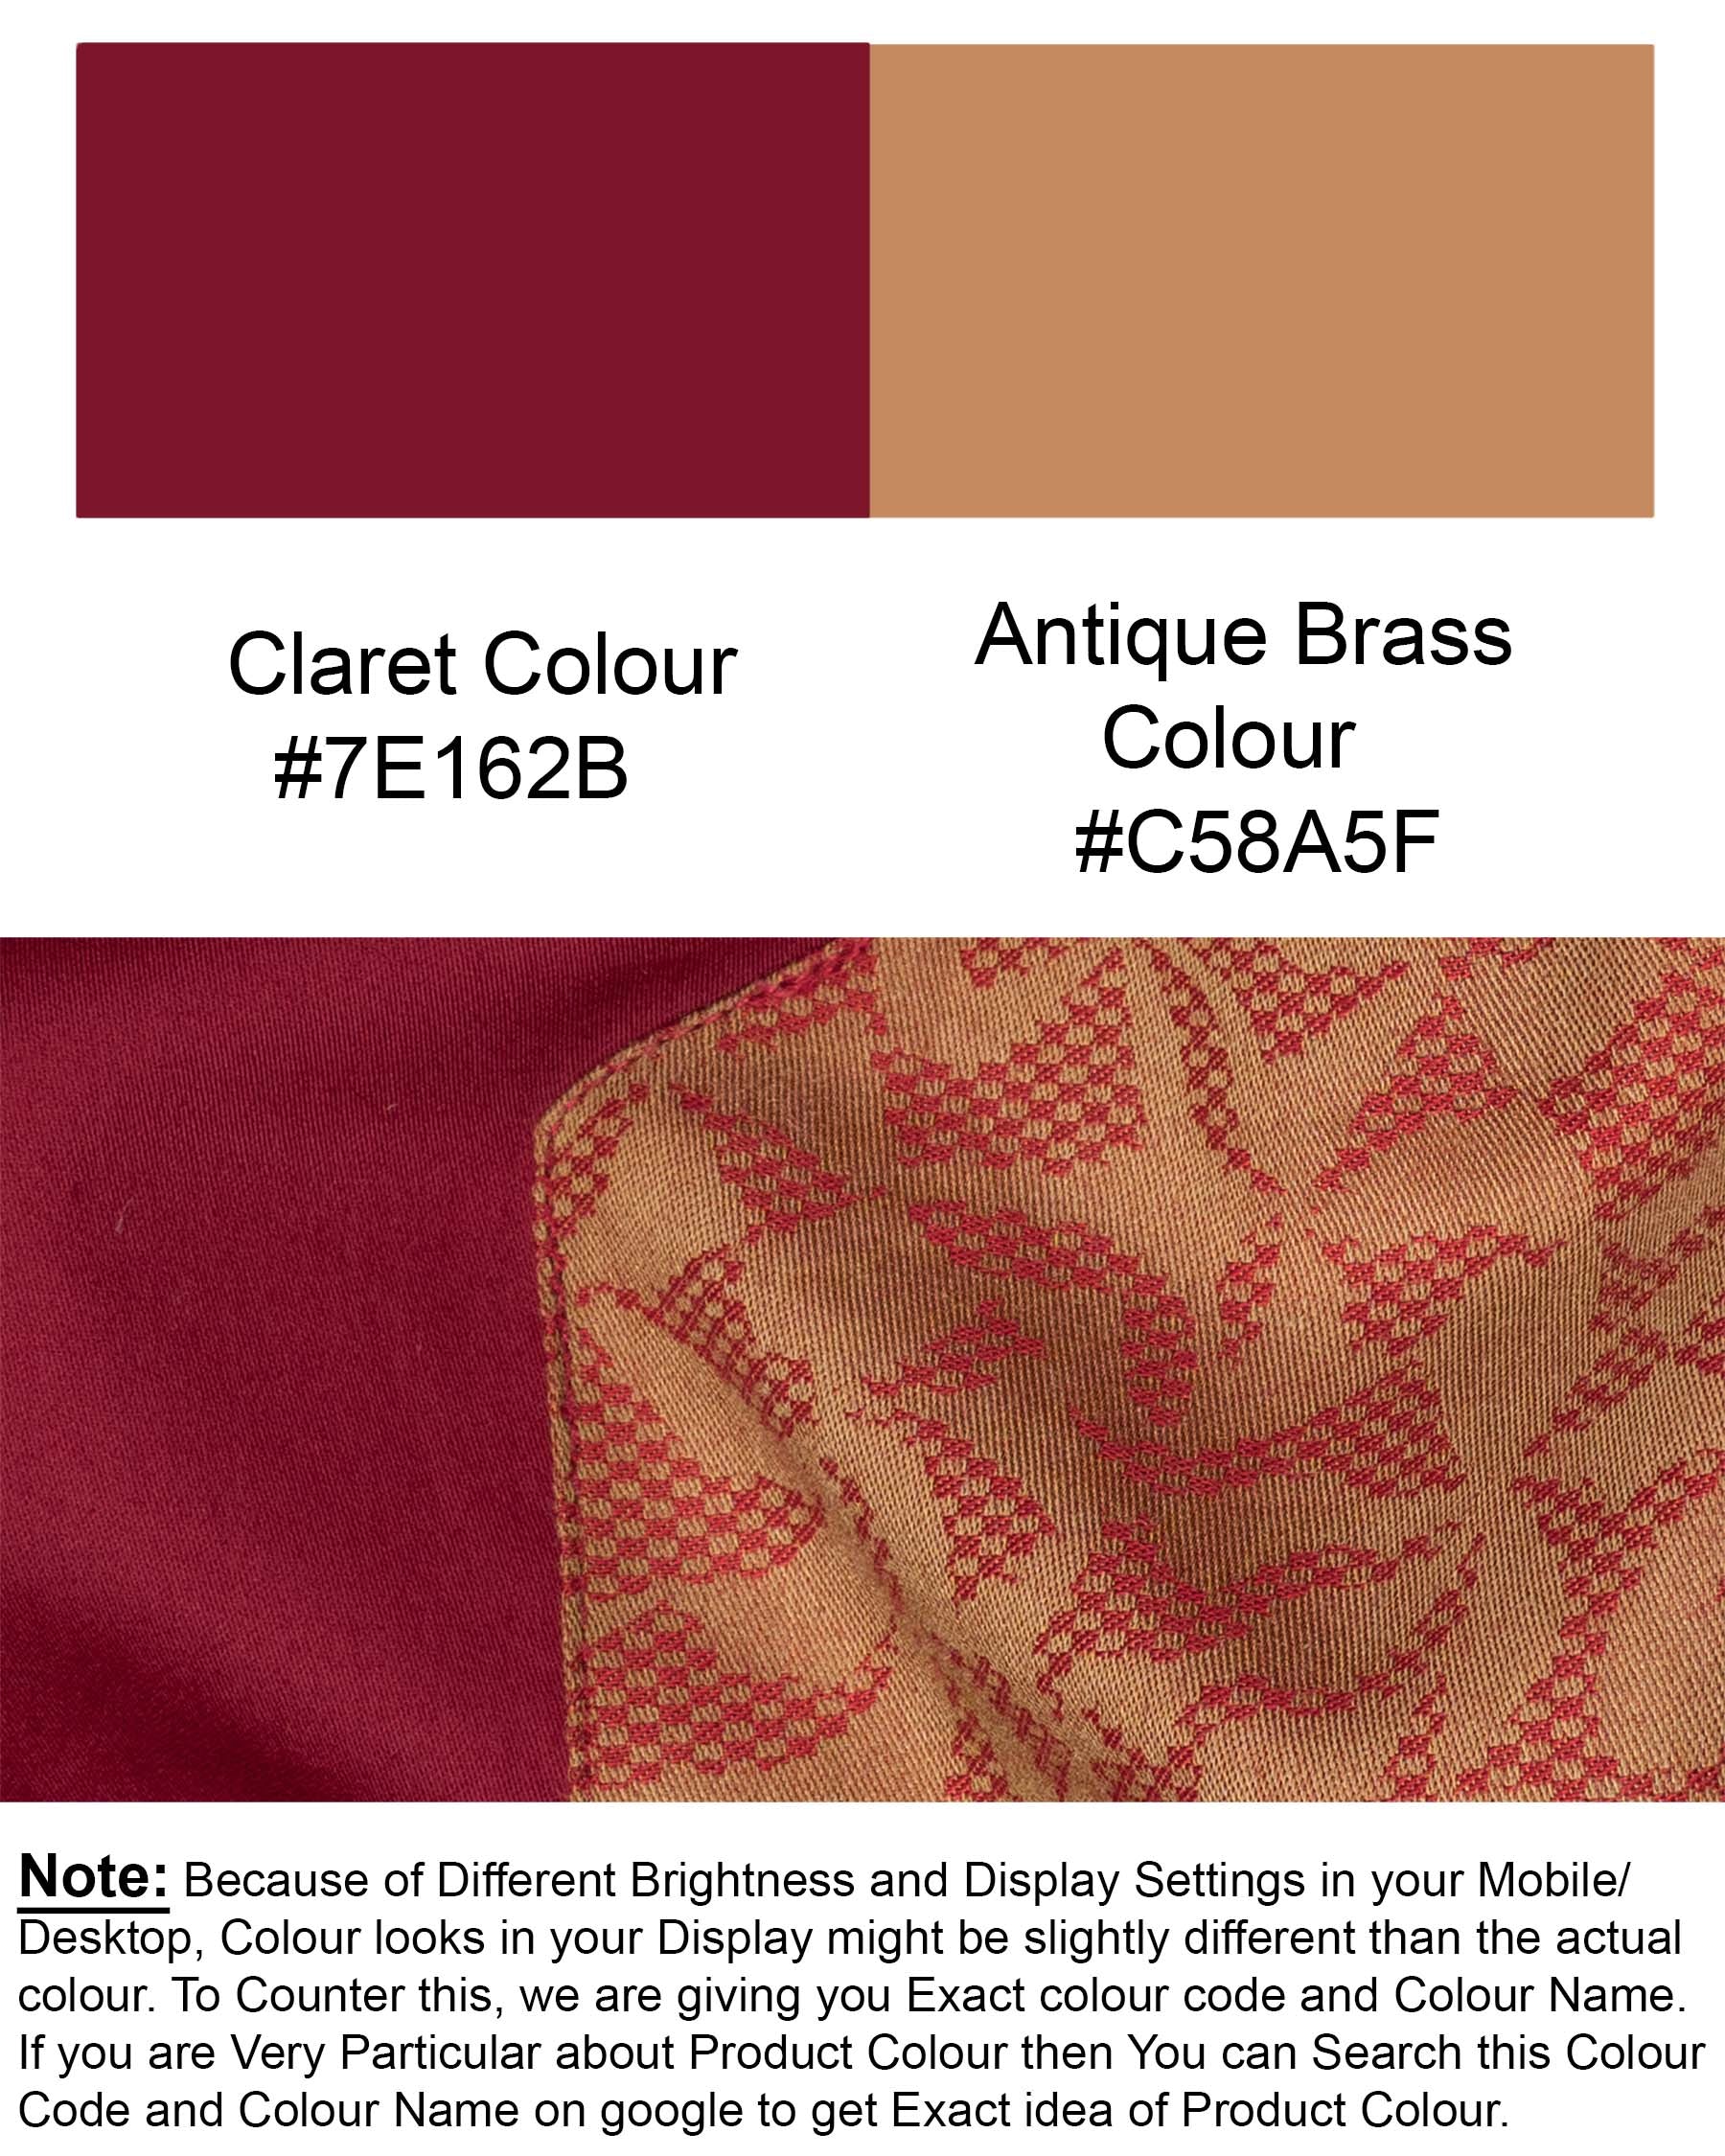 Claret Red with Antique Brass Super Soft Premium Cotton Designer Shirt 6942-P138-38,6942-P138-38,6942-P138-39,6942-P138-39,6942-P138-40,6942-P138-40,6942-P138-42,6942-P138-42,6942-P138-44,6942-P138-44,6942-P138-46,6942-P138-46,6942-P138-48,6942-P138-48,6942-P138-50,6942-P138-50,6942-P138-52,6942-P138-52